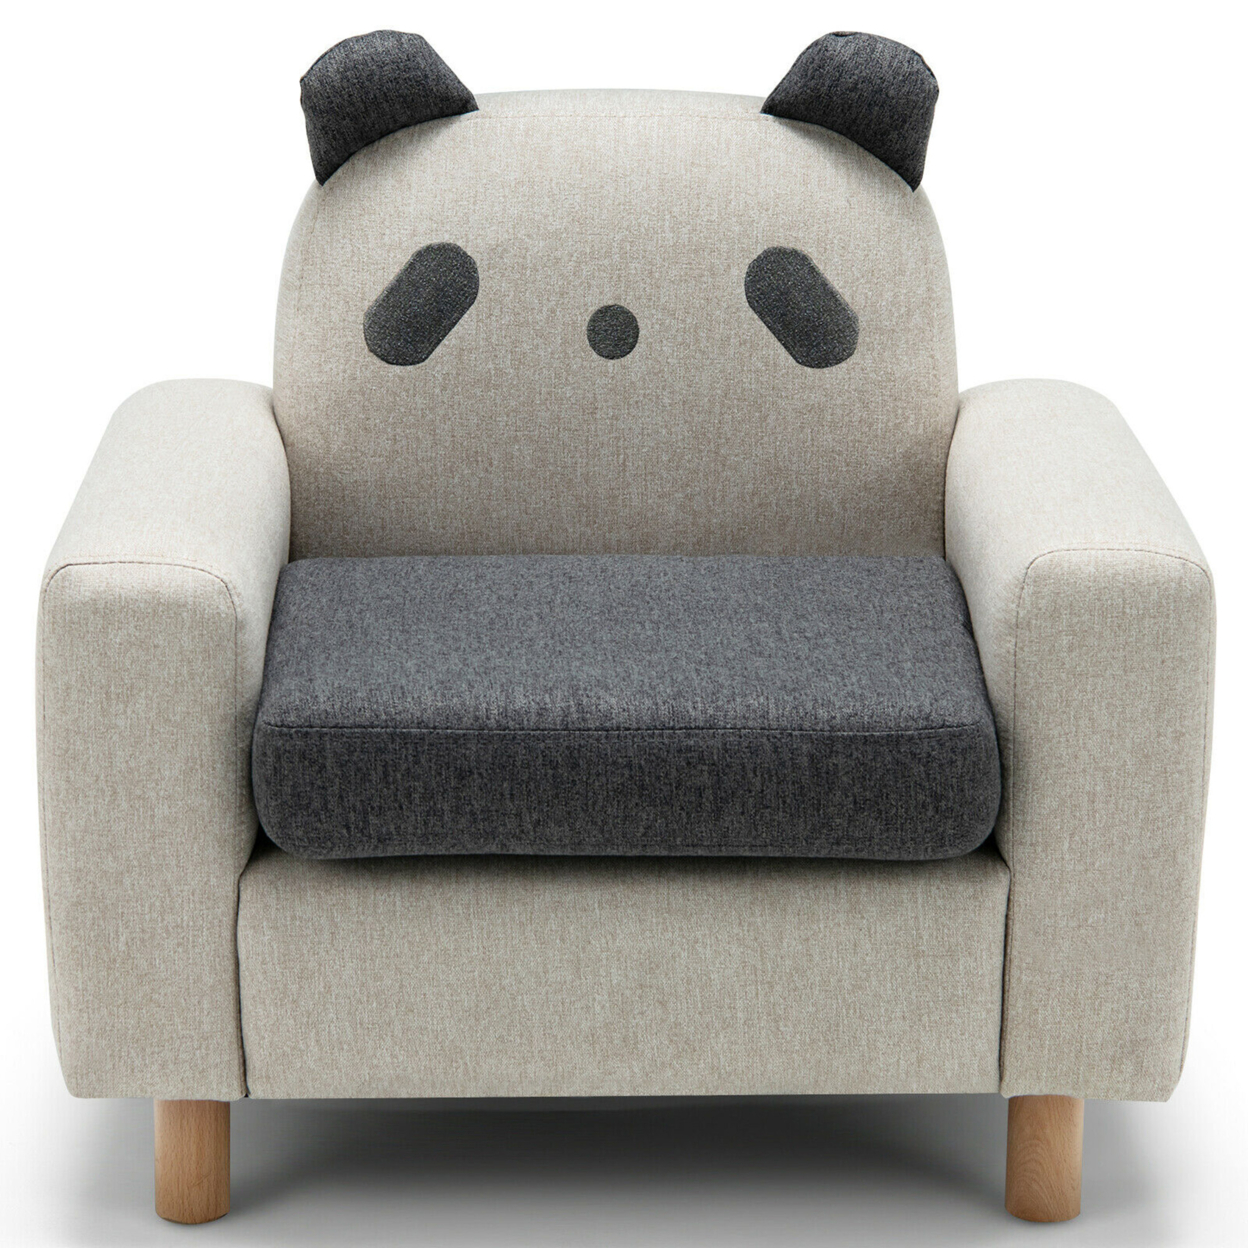 Kids Dinosaur/Panda/Chick Sofa Wooden Armrest Chair Couch W/ Thick Cushion Beech Legs Gift - Grey, Panda